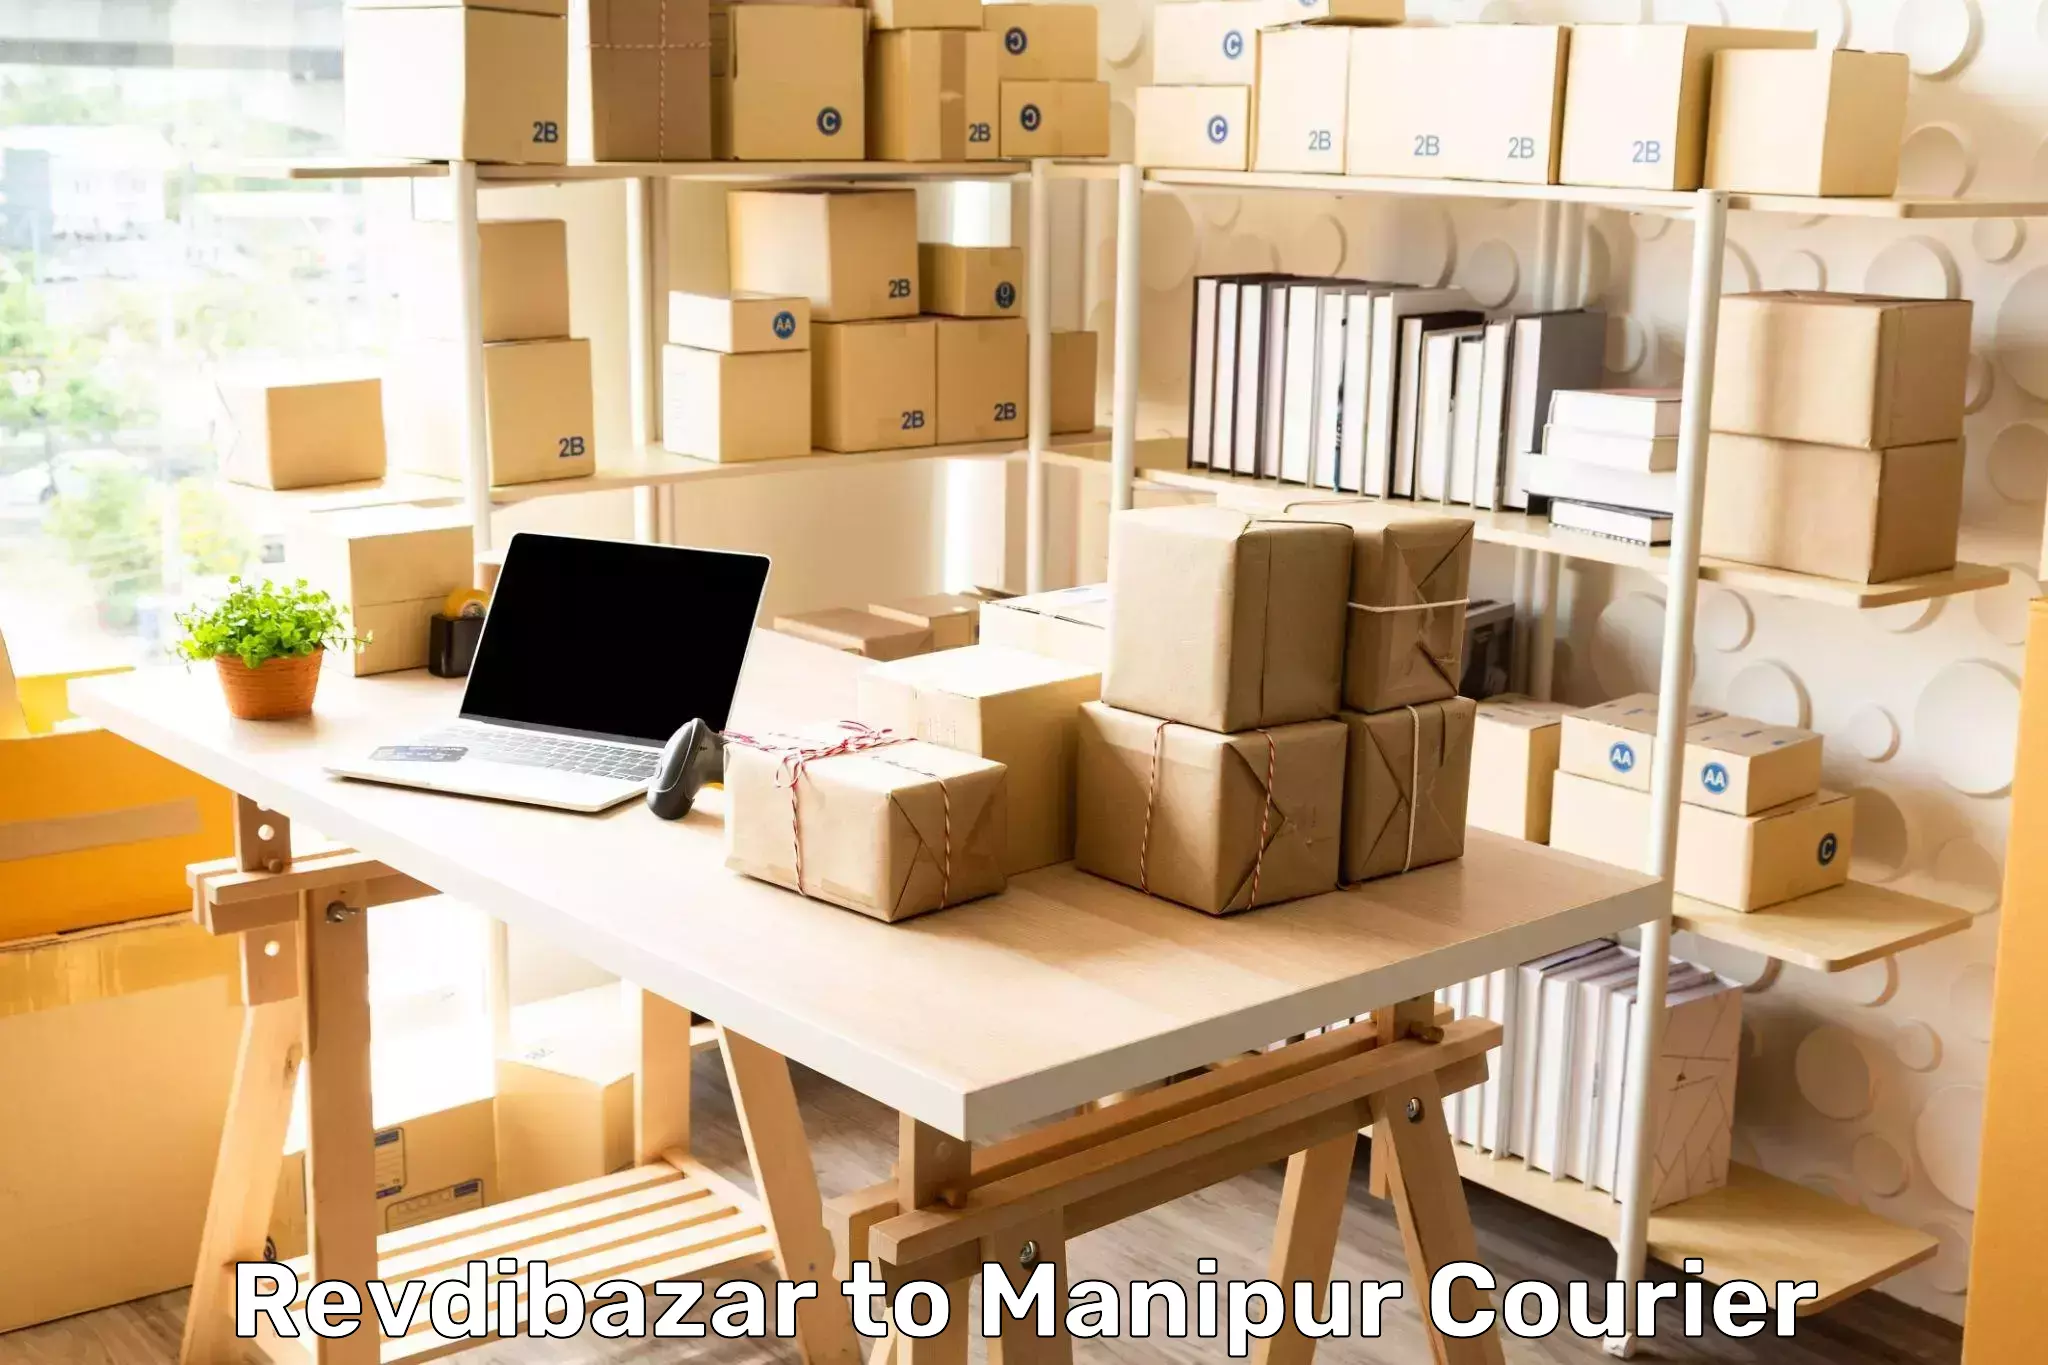 Efficient courier operations Revdibazar to Senapati